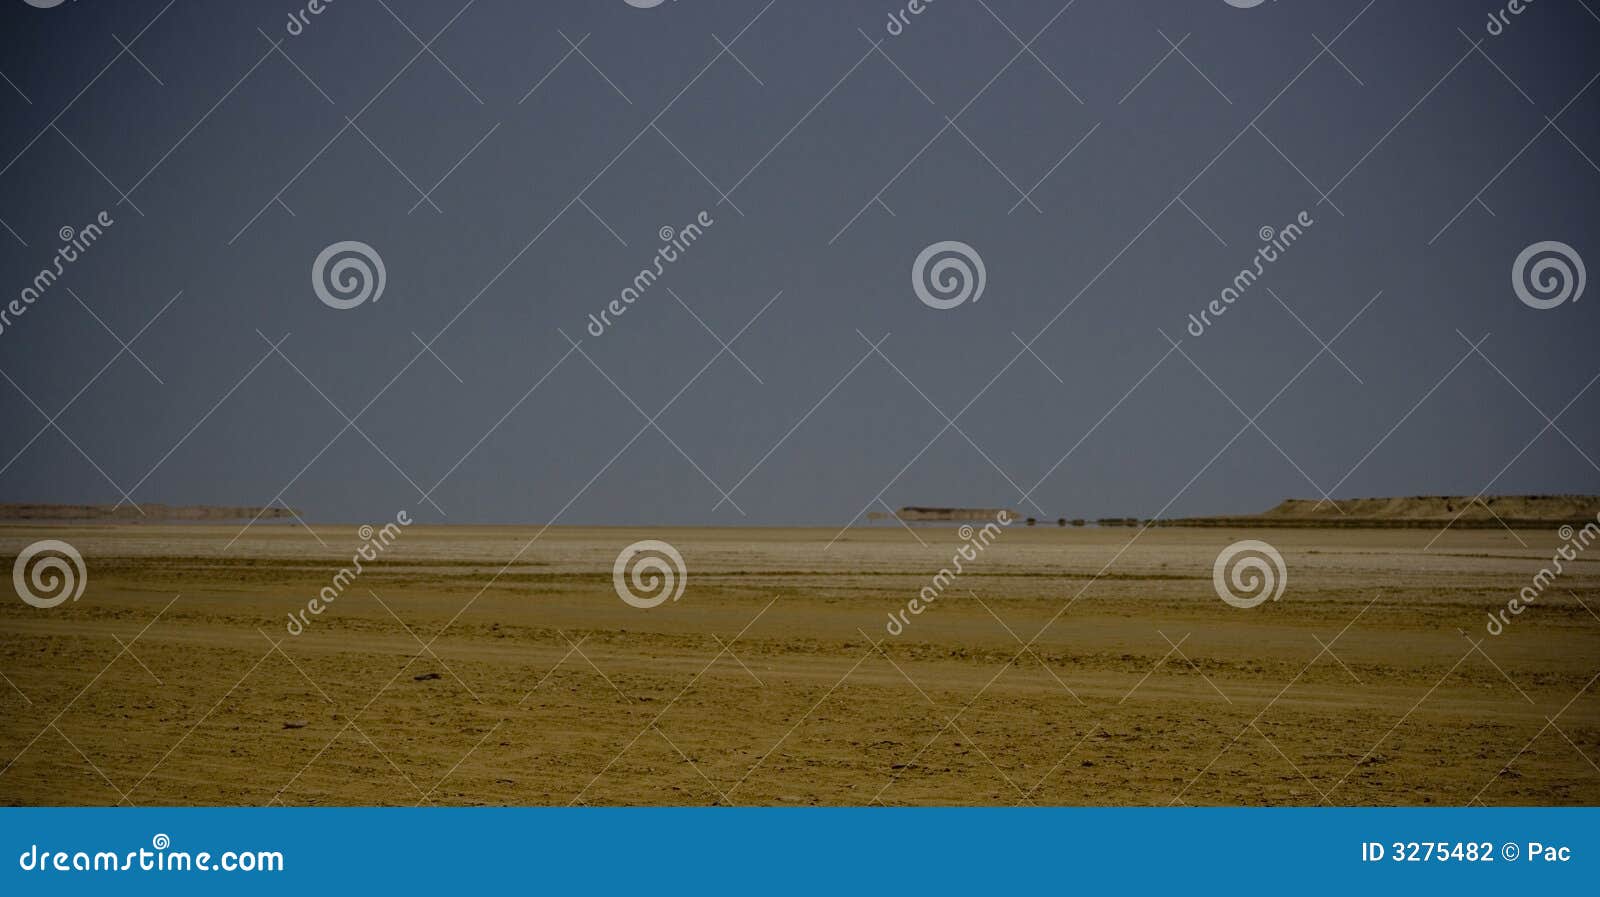 arid landscape with mirage